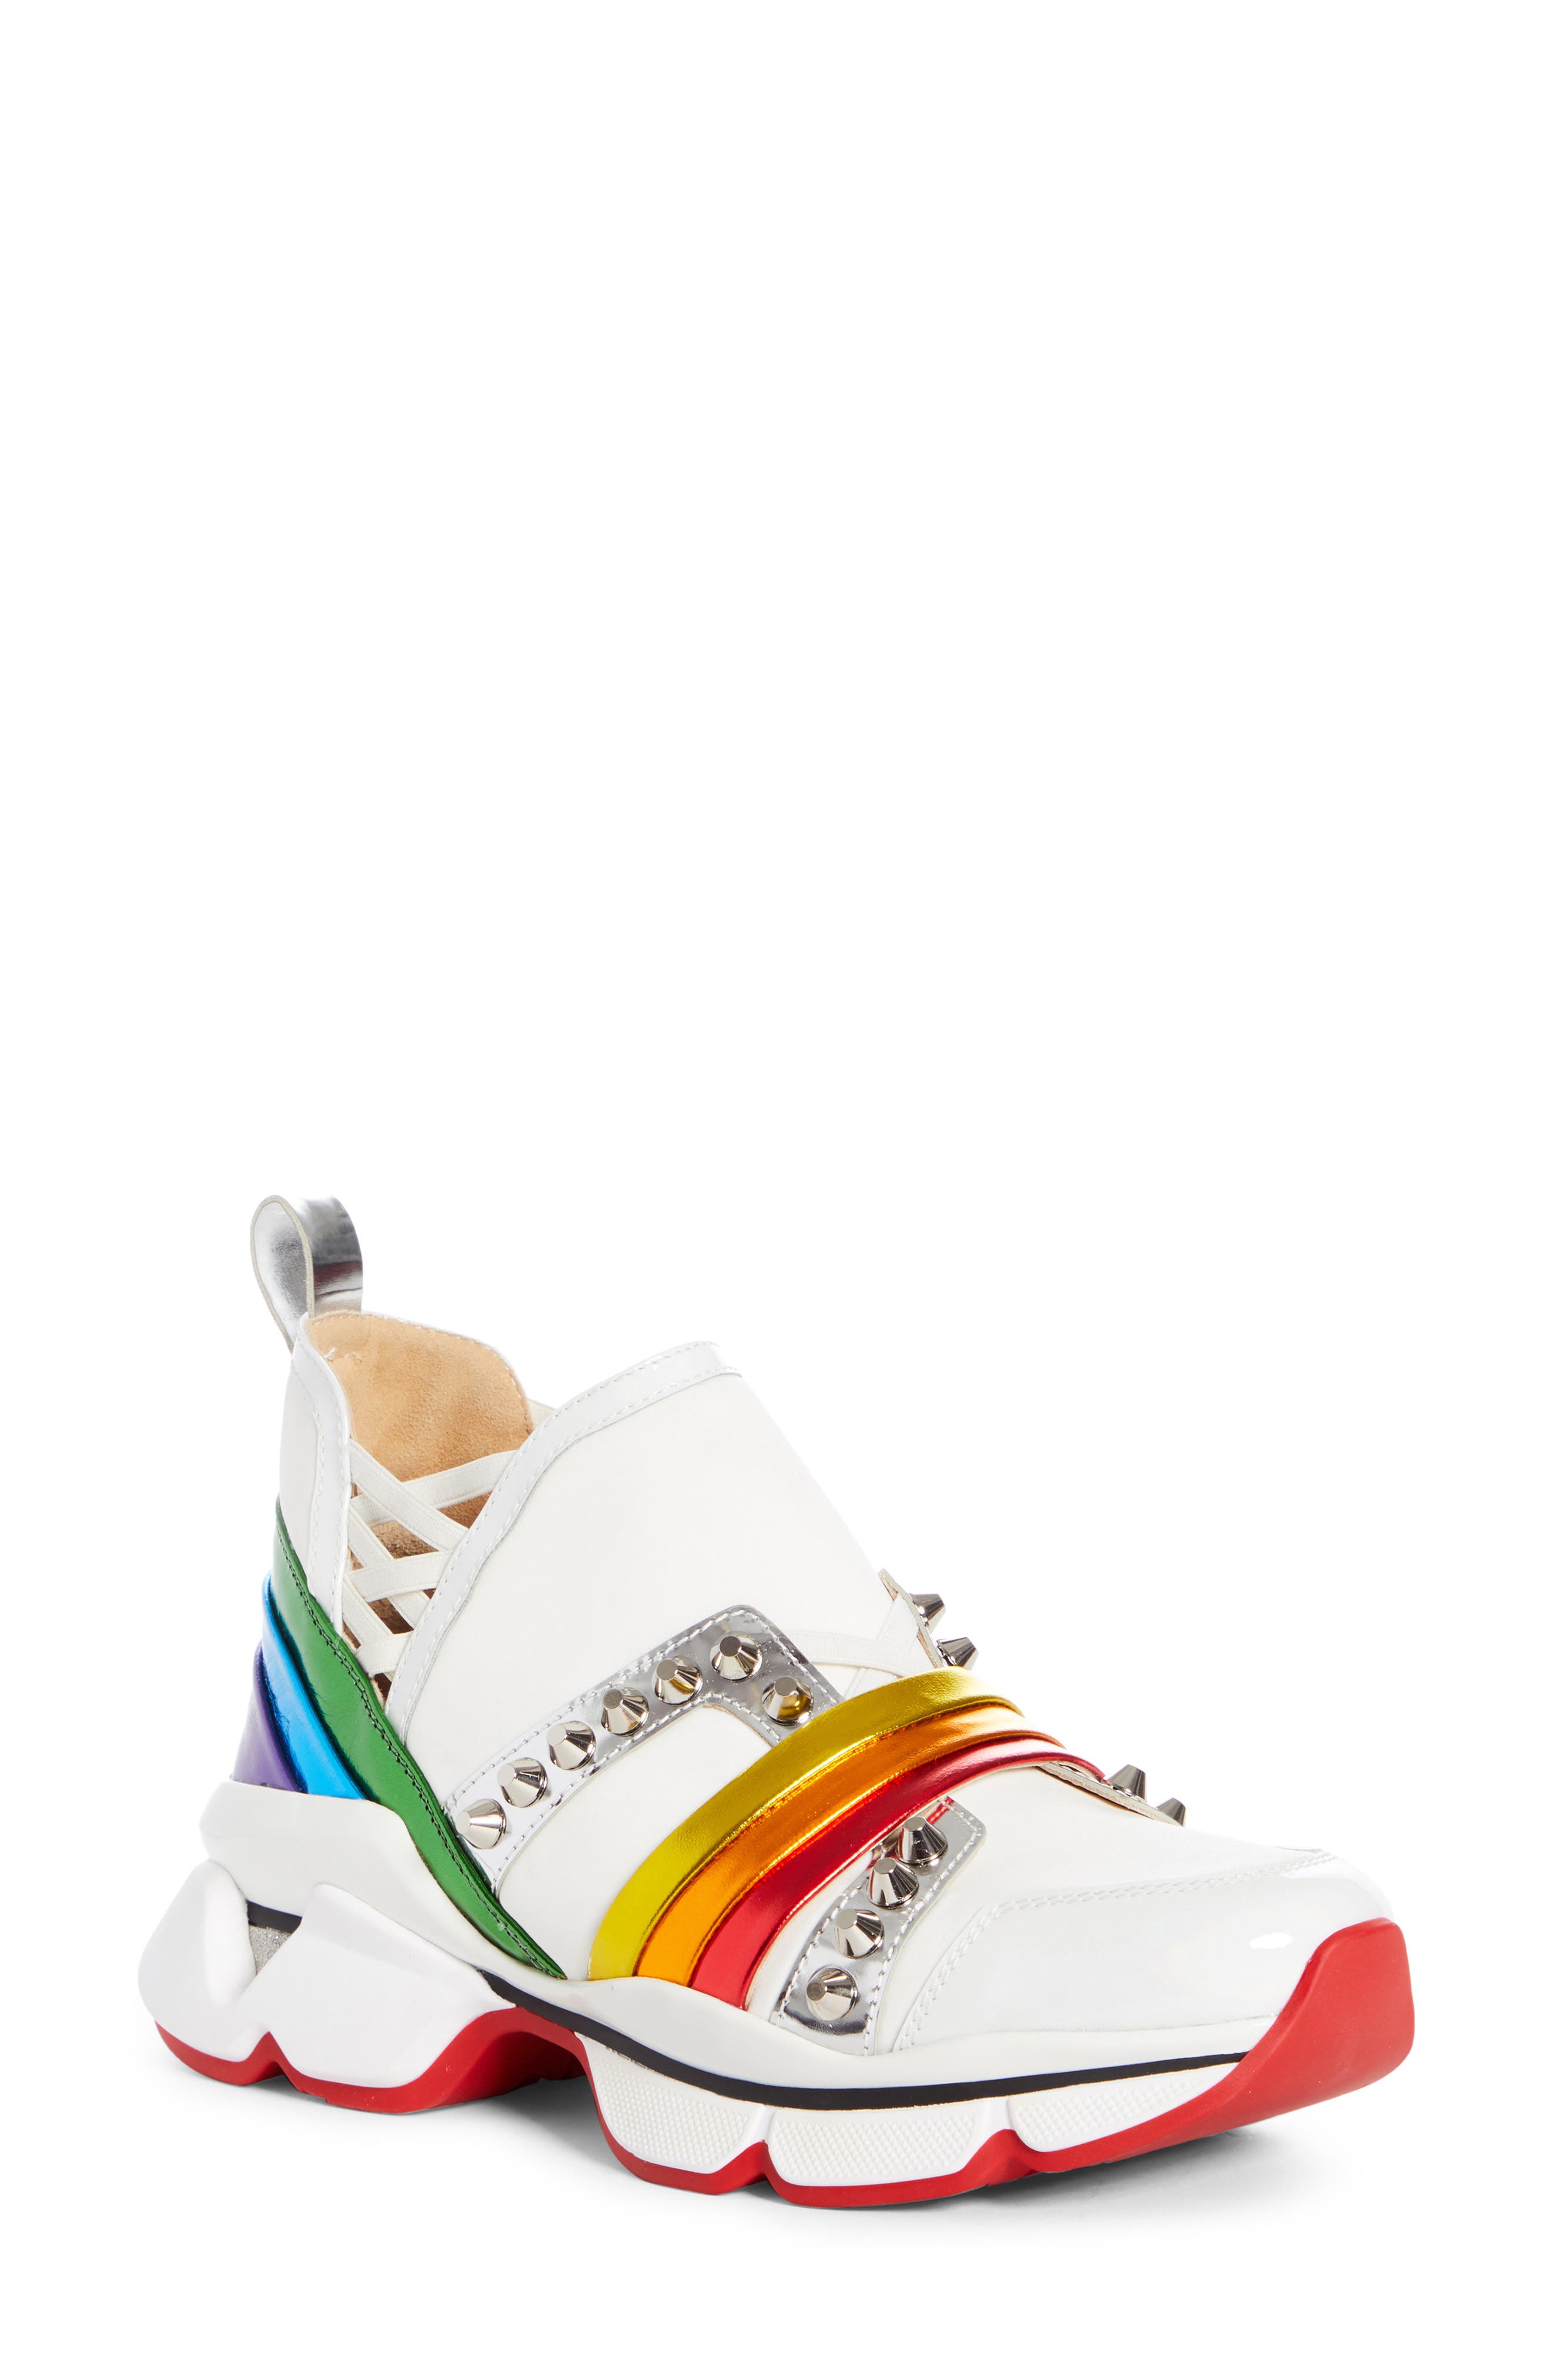 rainbow christian louboutin sneakers